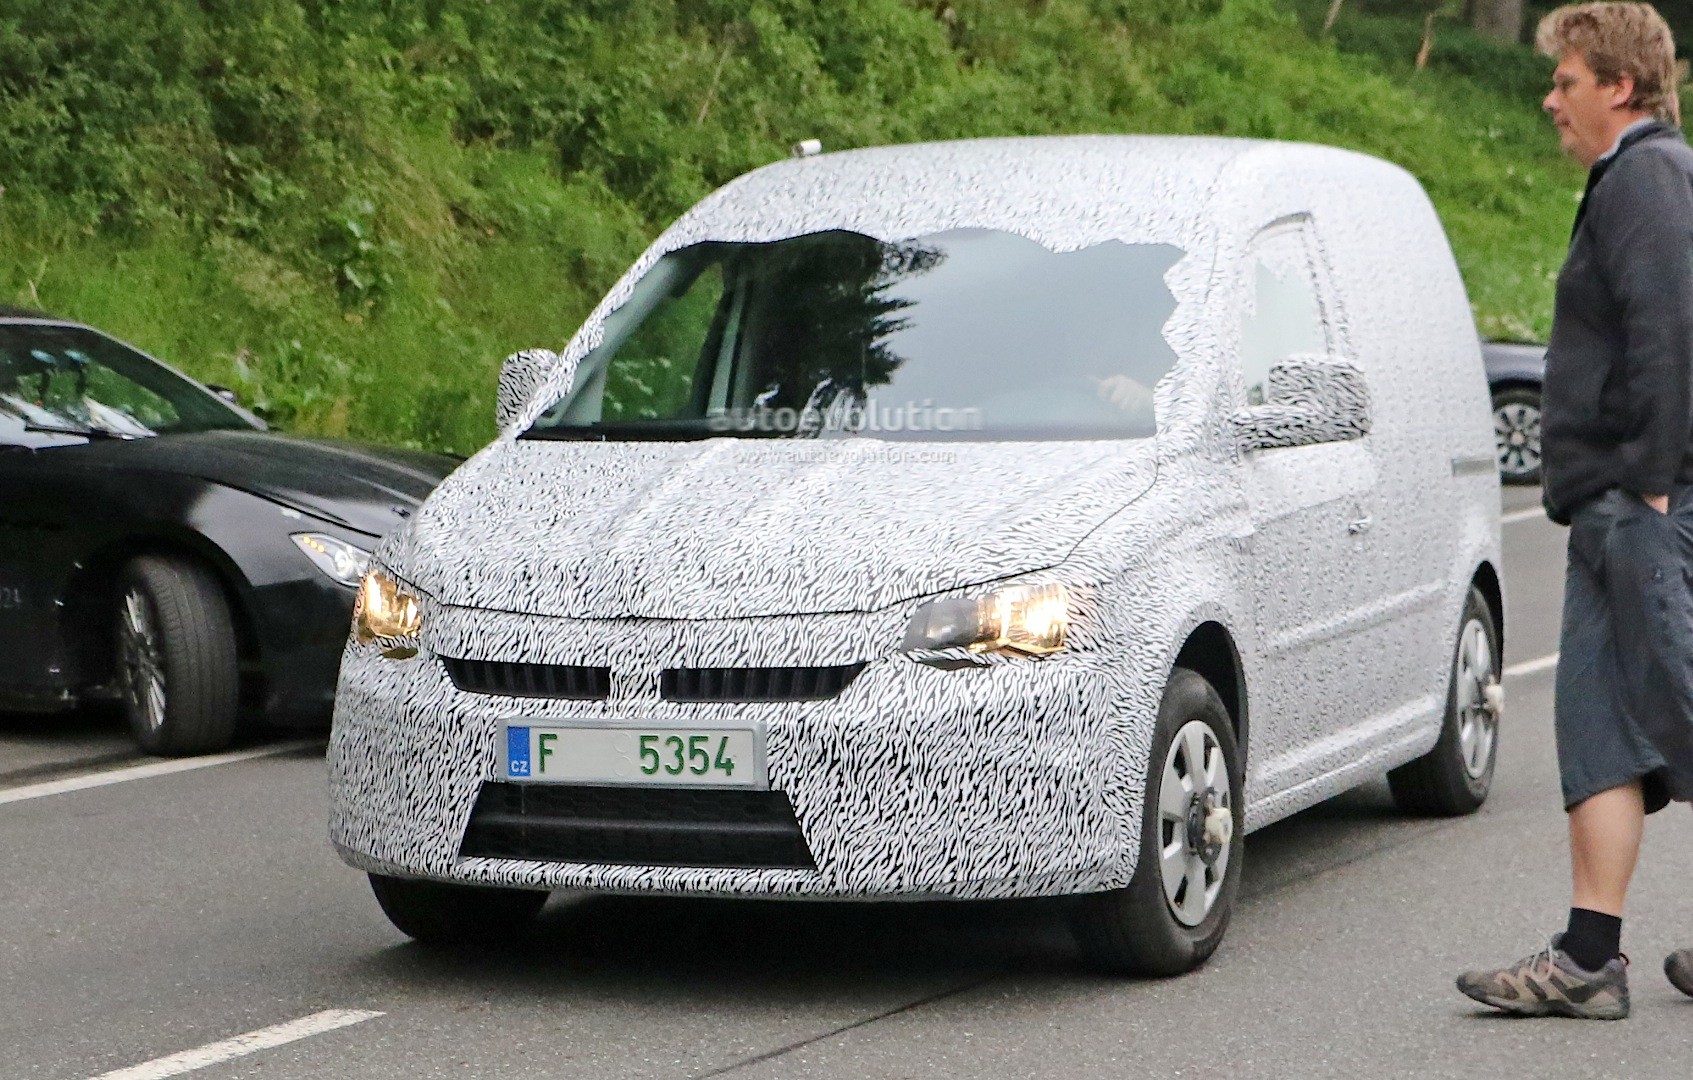 New Škoda Roomster 2016/2017 